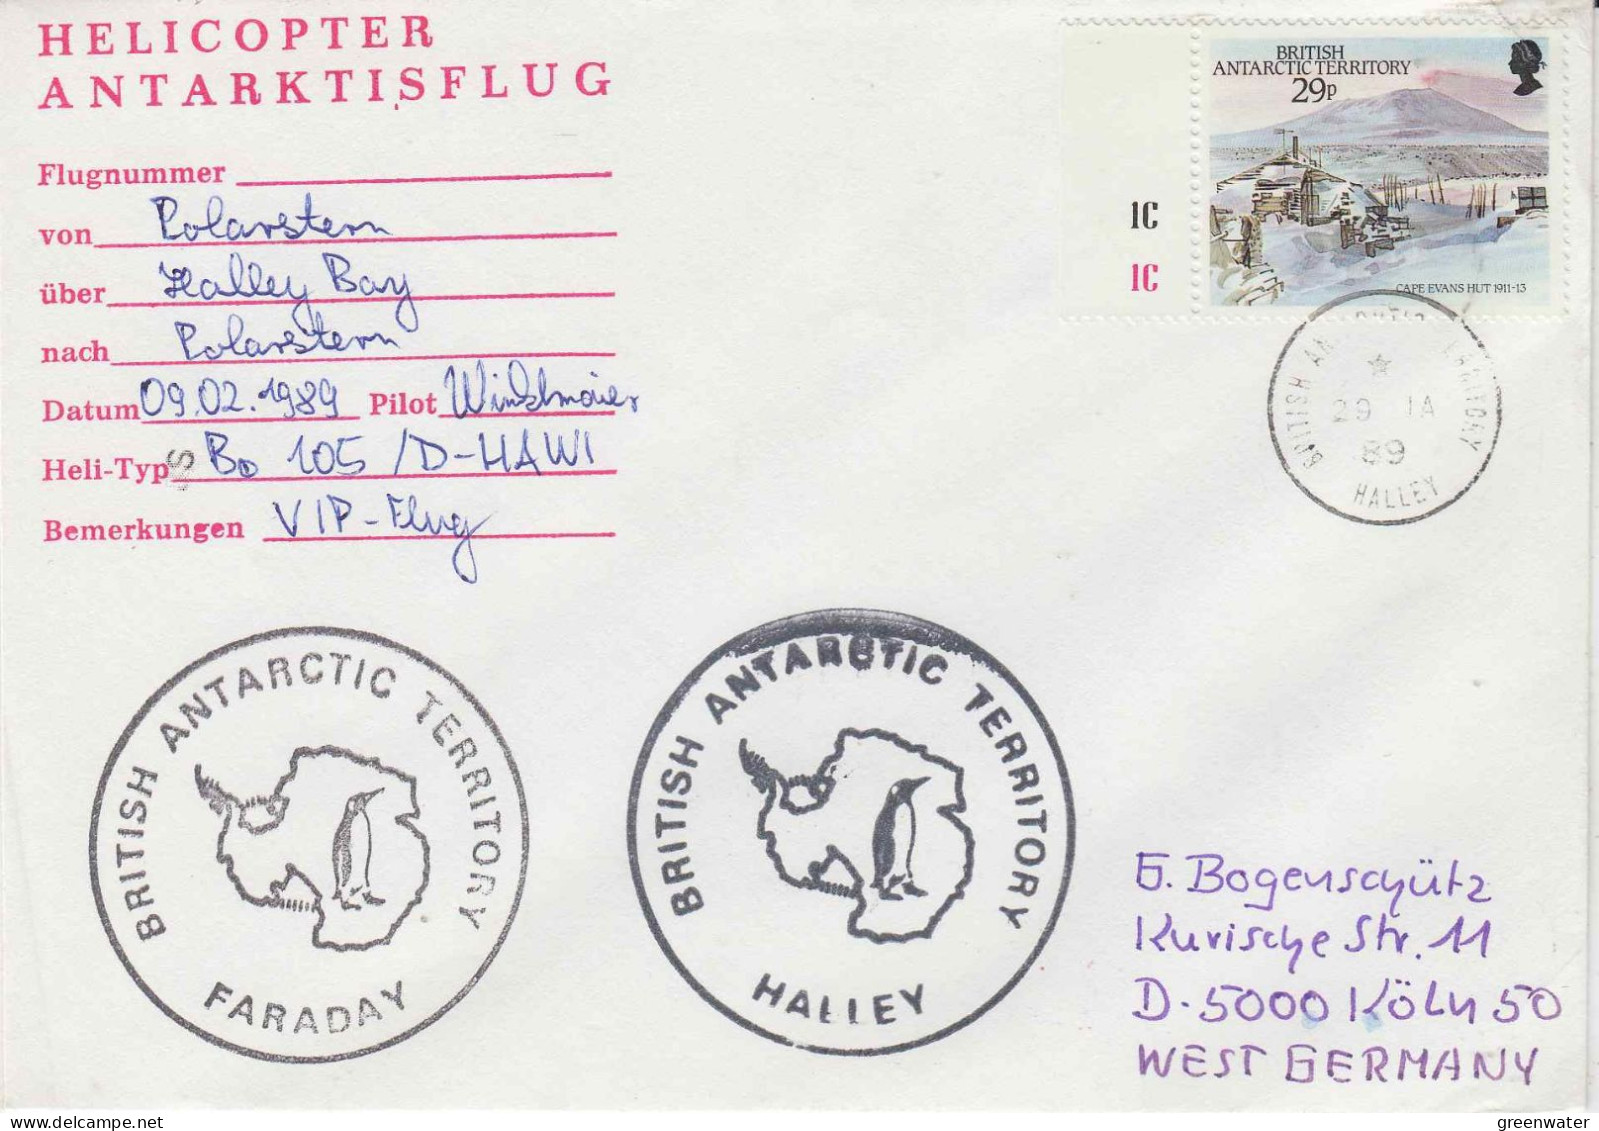 British Antarctic Territory (BAT) Polarstern Antarctic Flight From Polarstern To Halley 09.02.1989 (PT155A) - Vuelos Polares